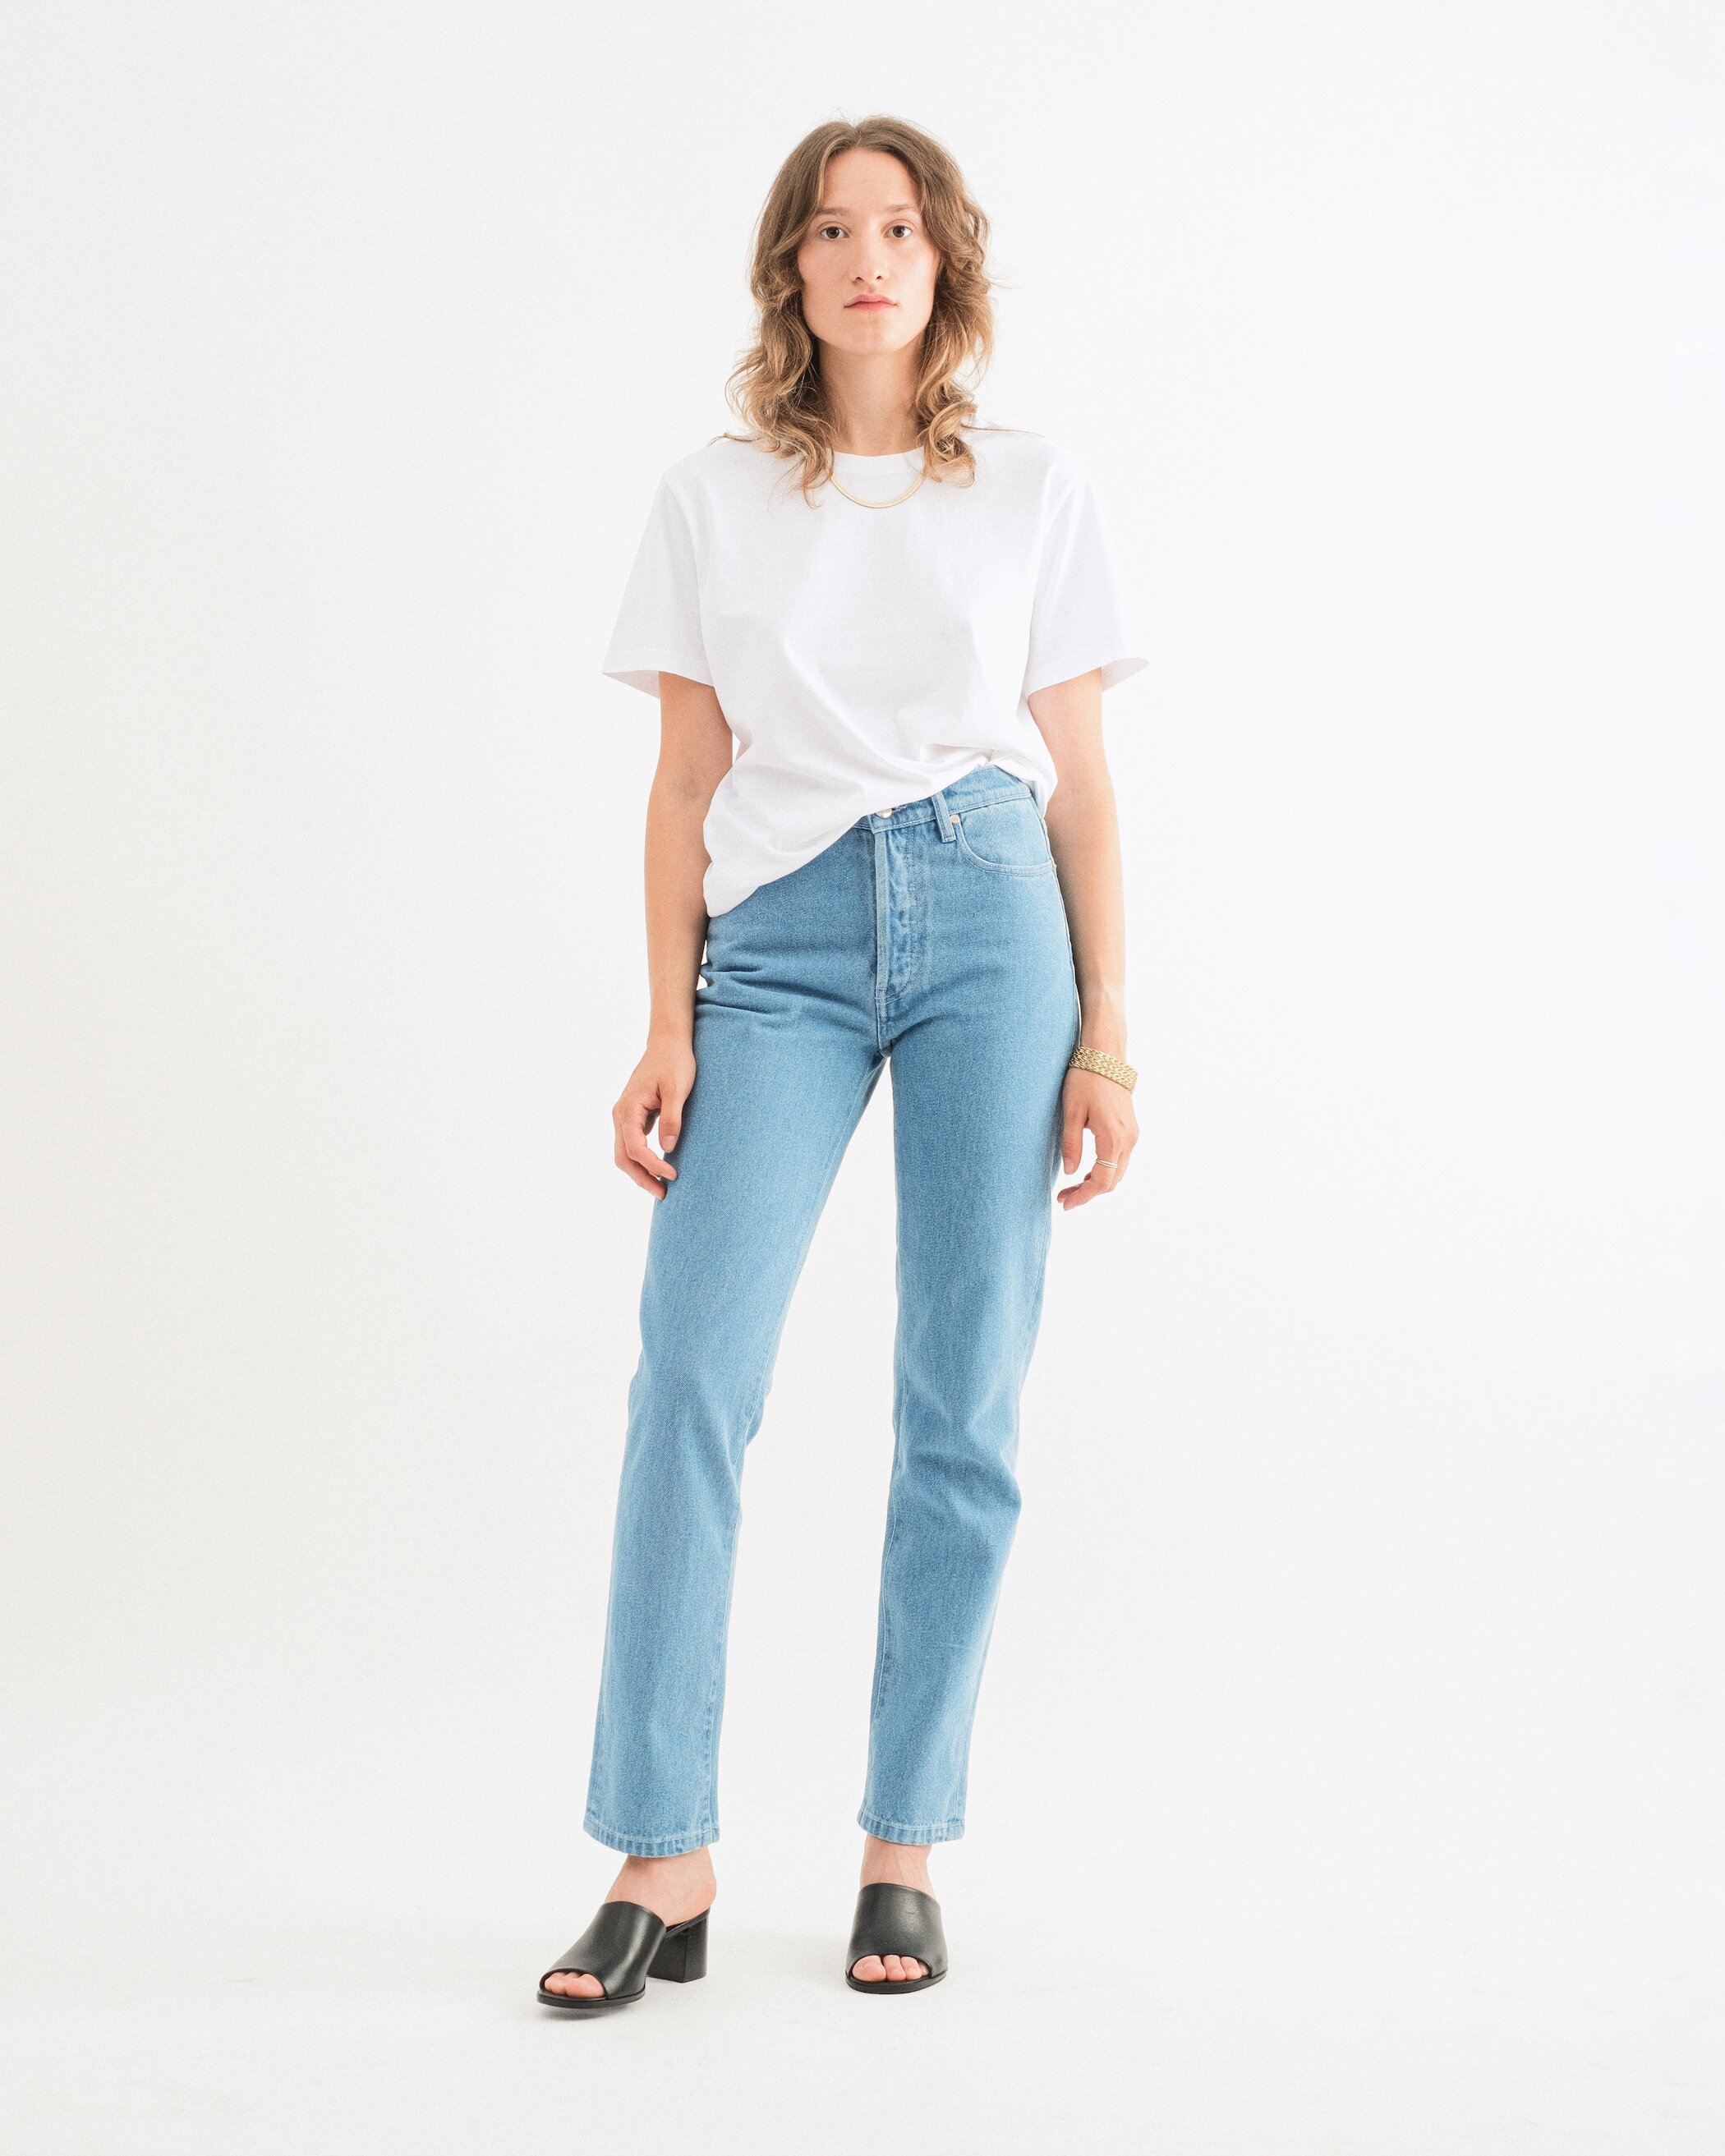 Glein - Jeans Women